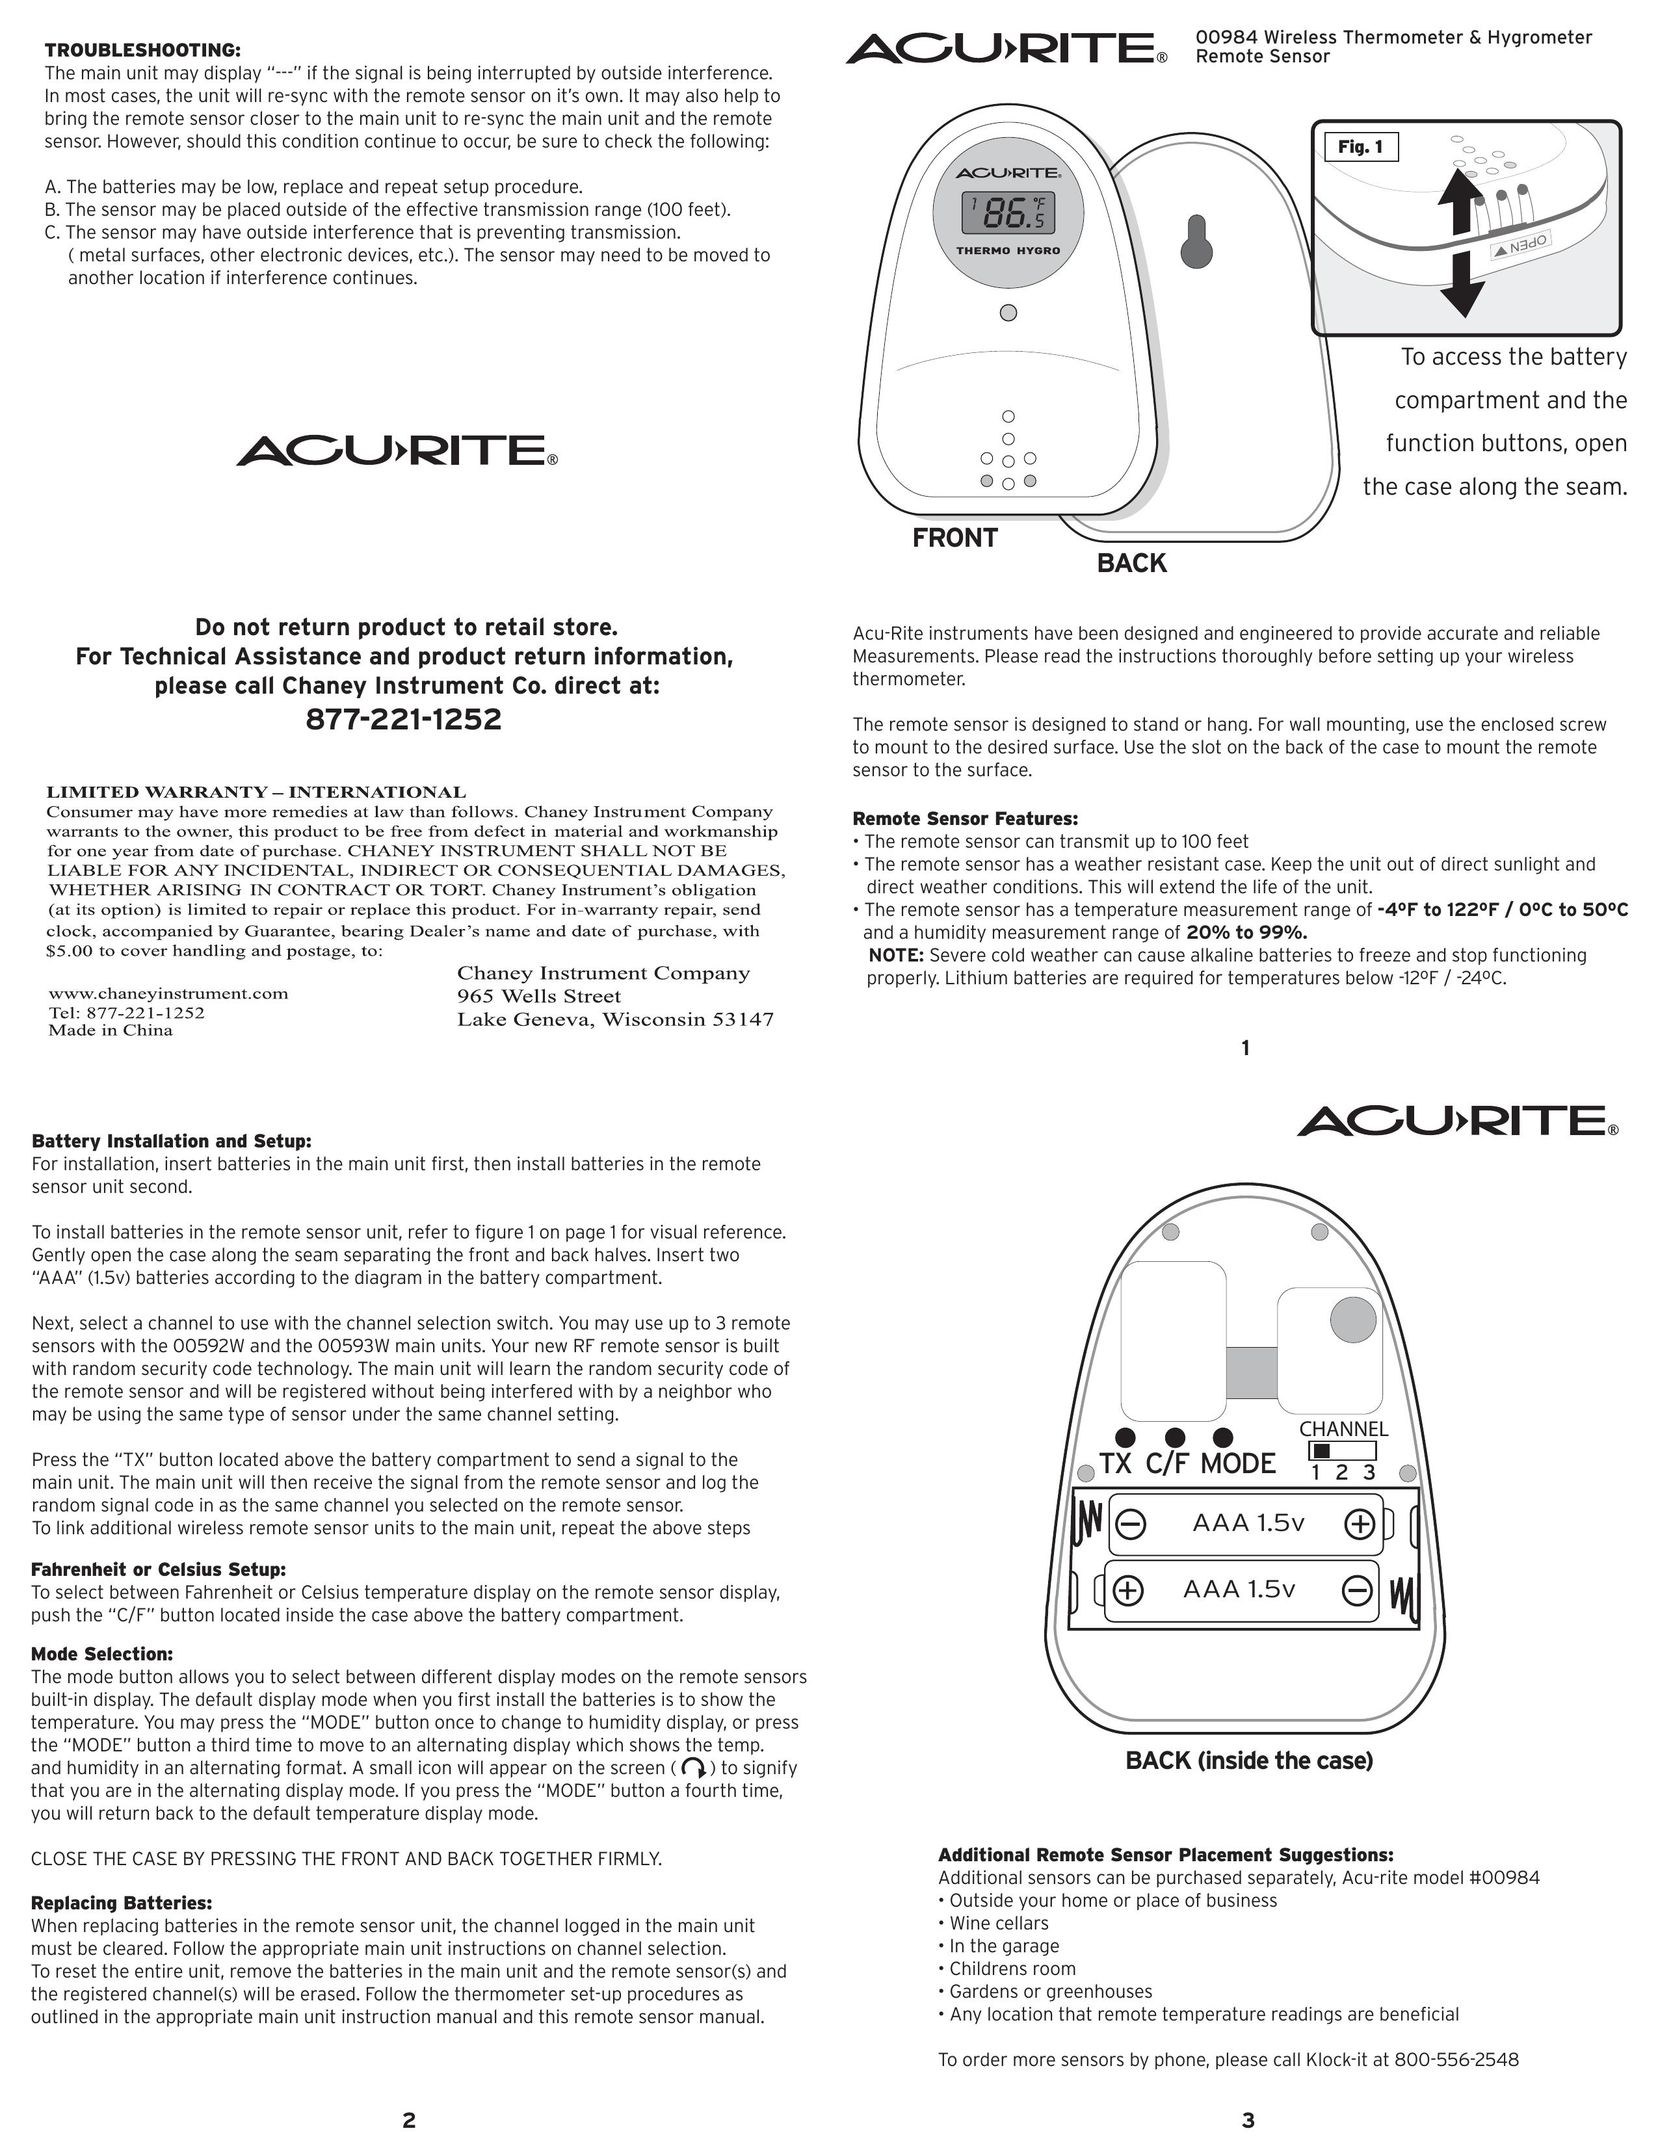 Acu-Rite 984 Clock User Manual